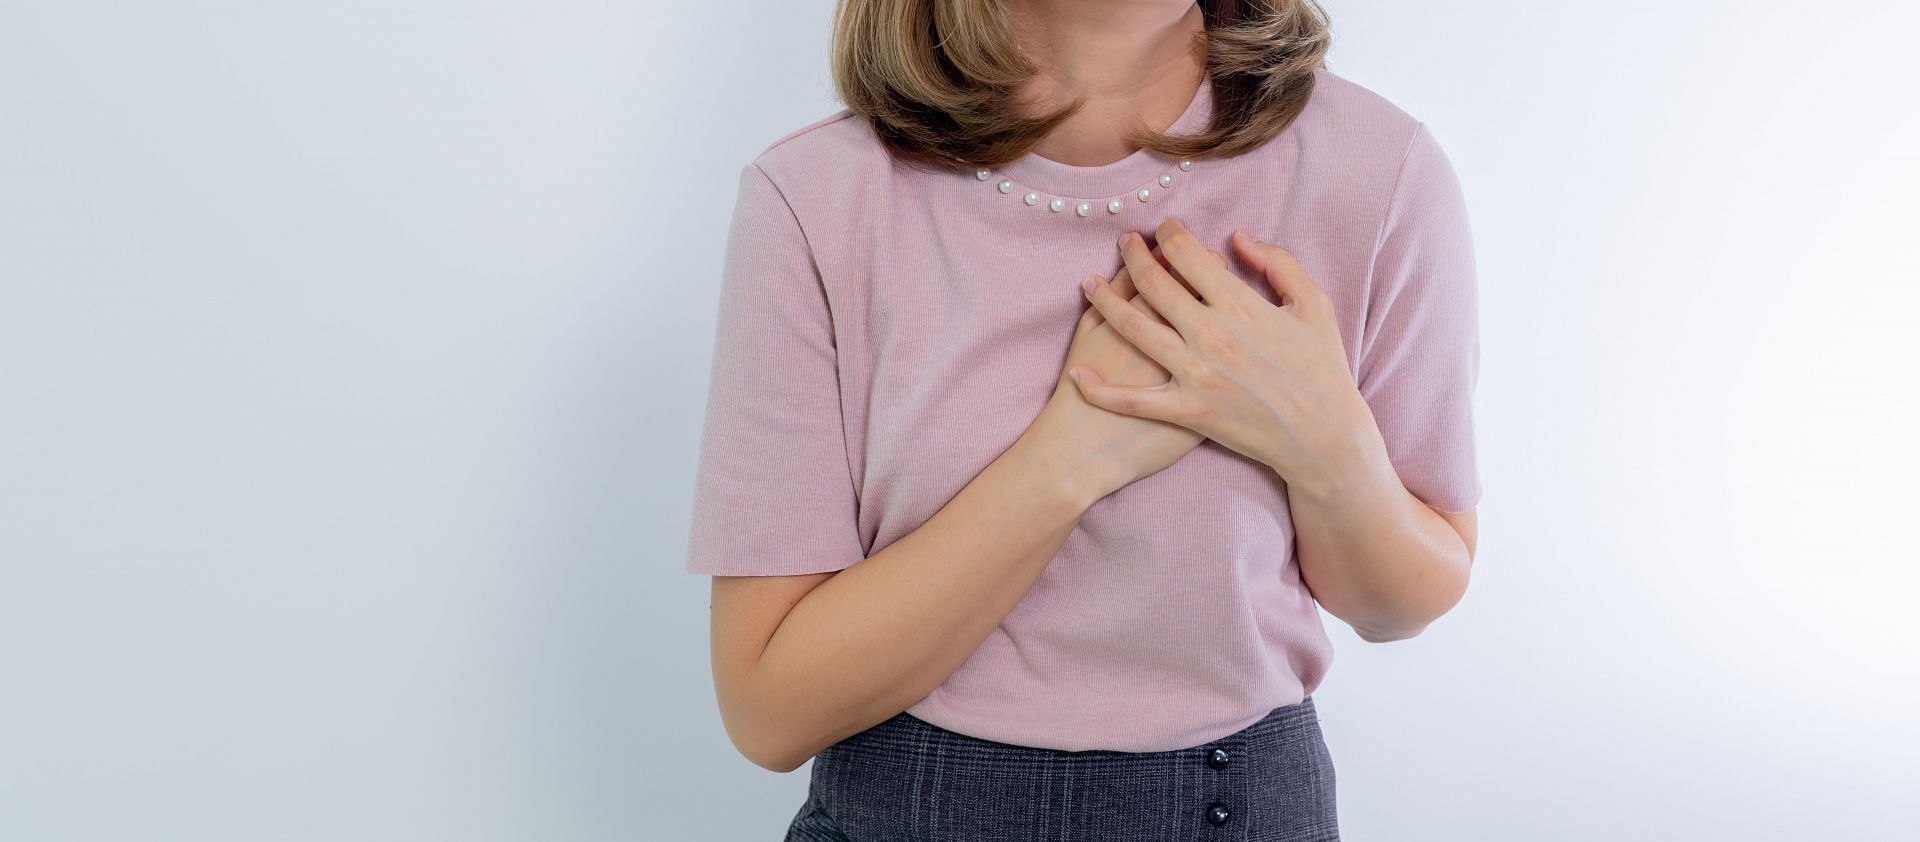 GERD can also cause heartburn or acid reflux. (Image via Pexels/puwadon sangngern)